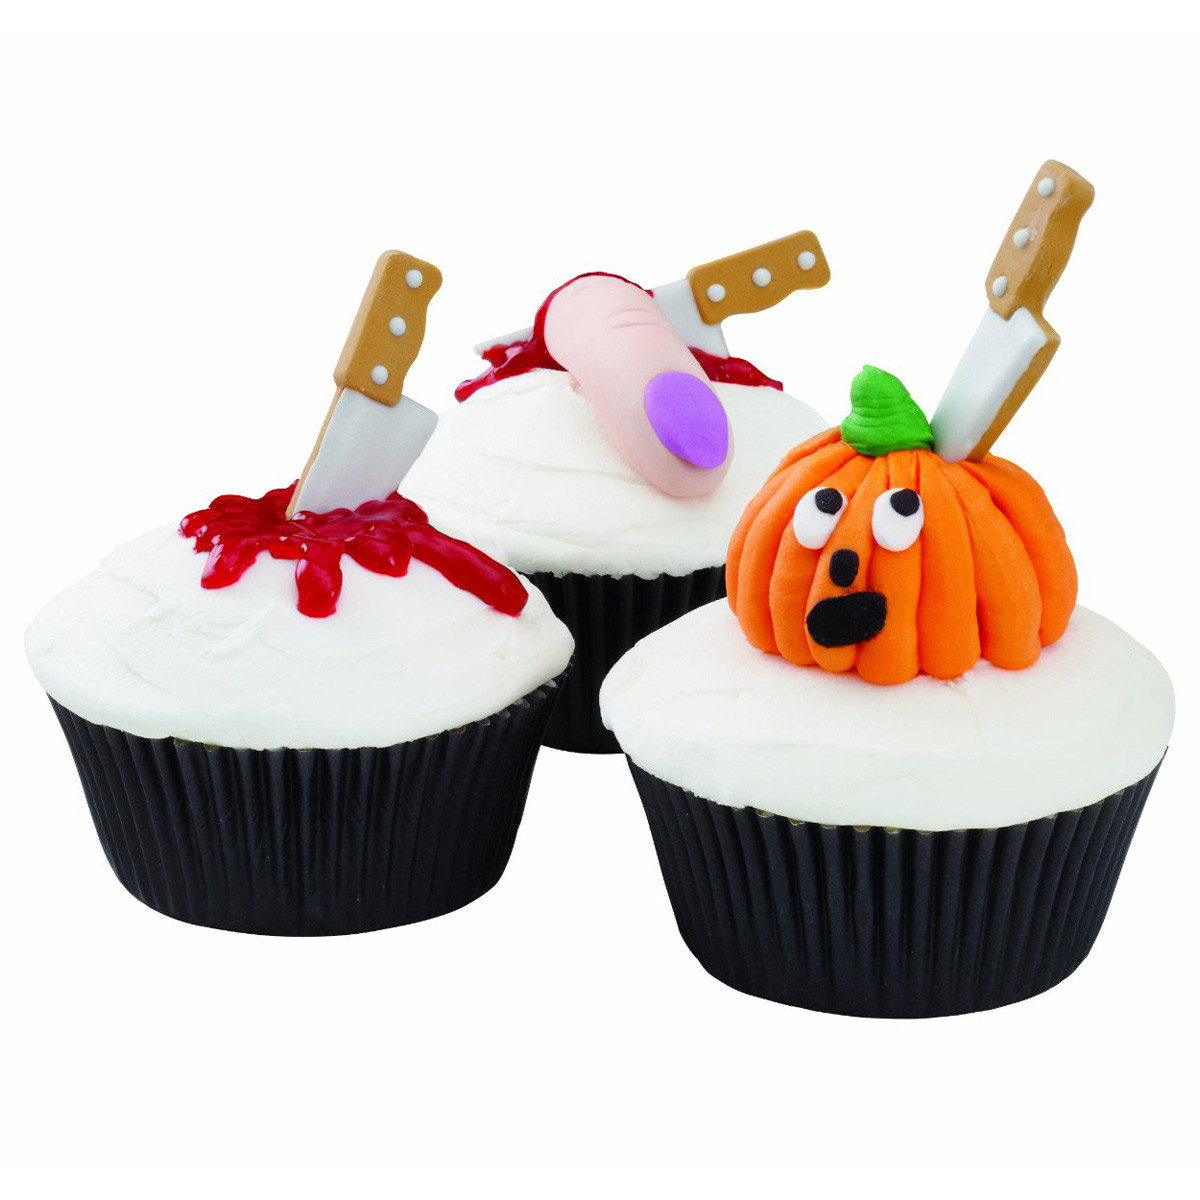 Halloween Cupcakes Decorating Ideas
 Wilton Halloween Knife Cupcake Icing Decorations The